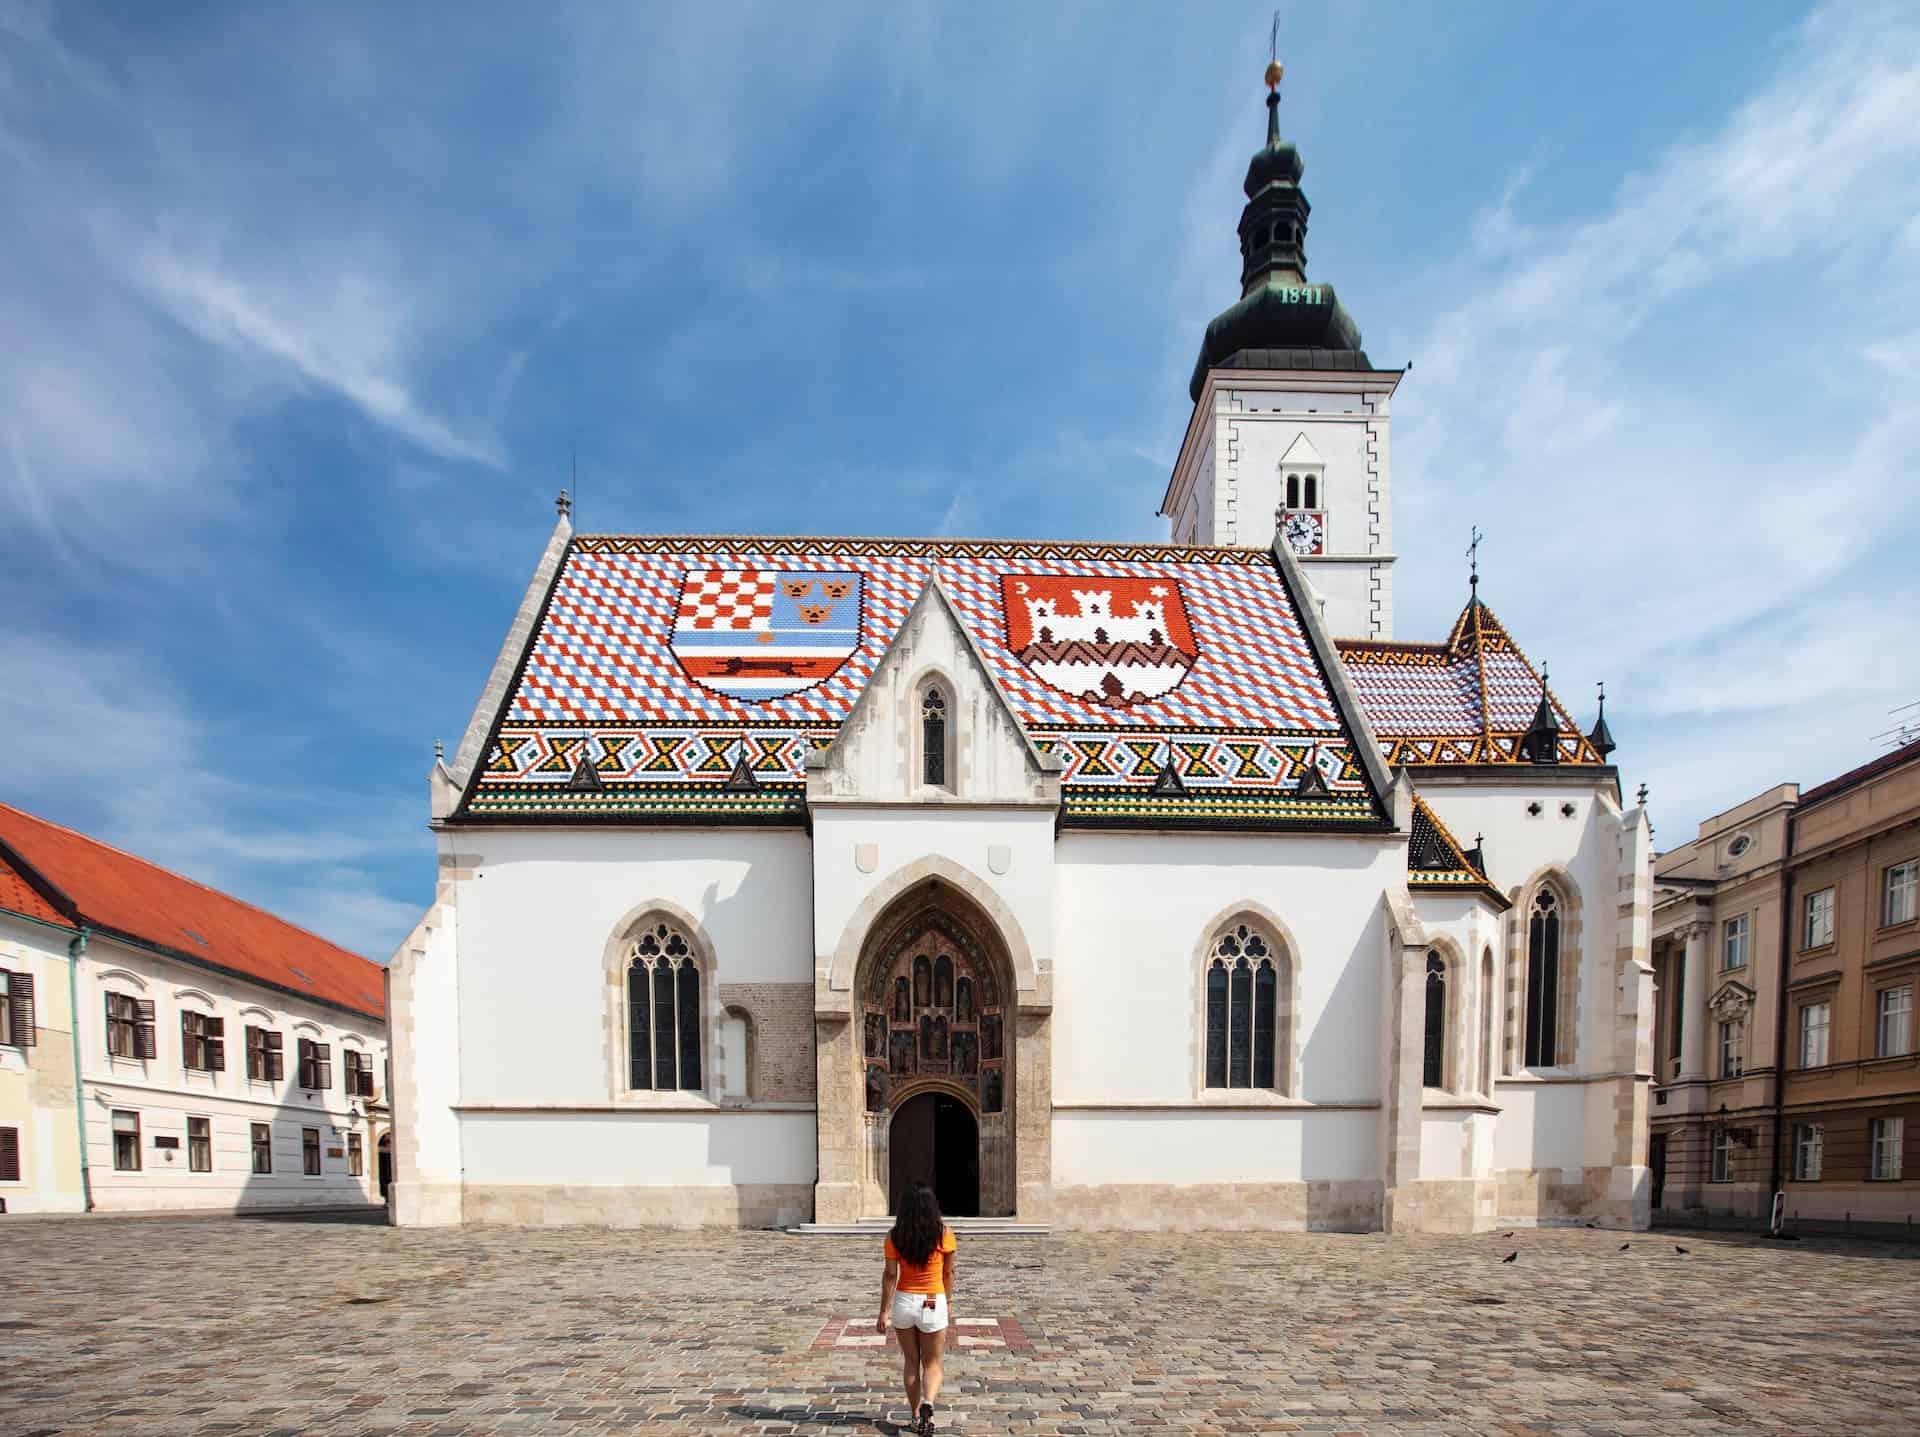 Best things to do in Zagreb Croatia - Christy Kranjec - St Marks Church by martin bennie on Unsplash